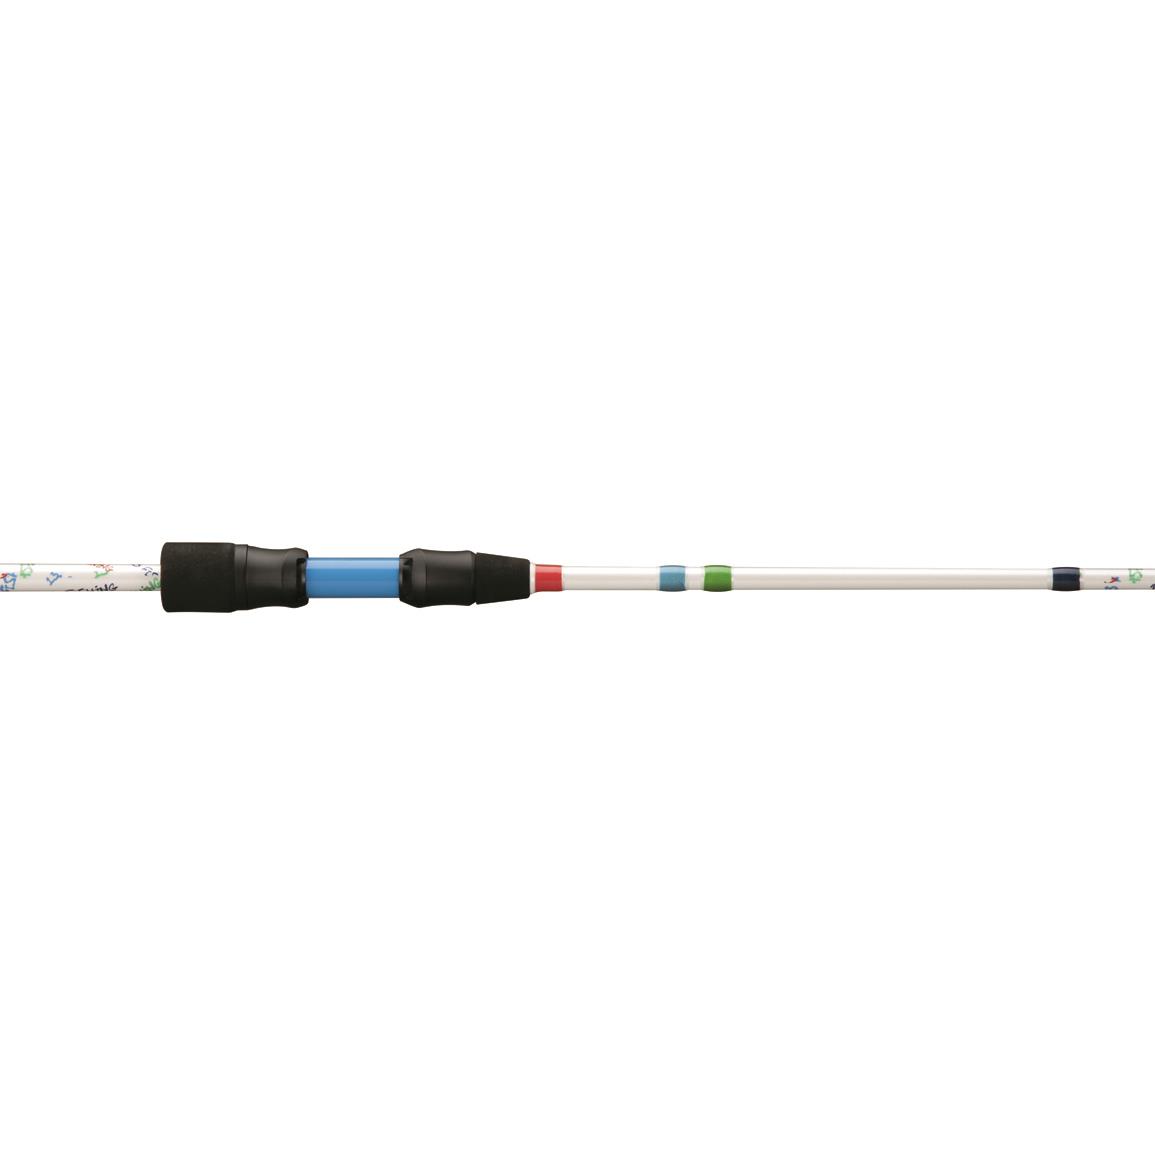 Daiwa Acculite Salmon/Trout/Steelhead Spinning Rod, 8'6 Length